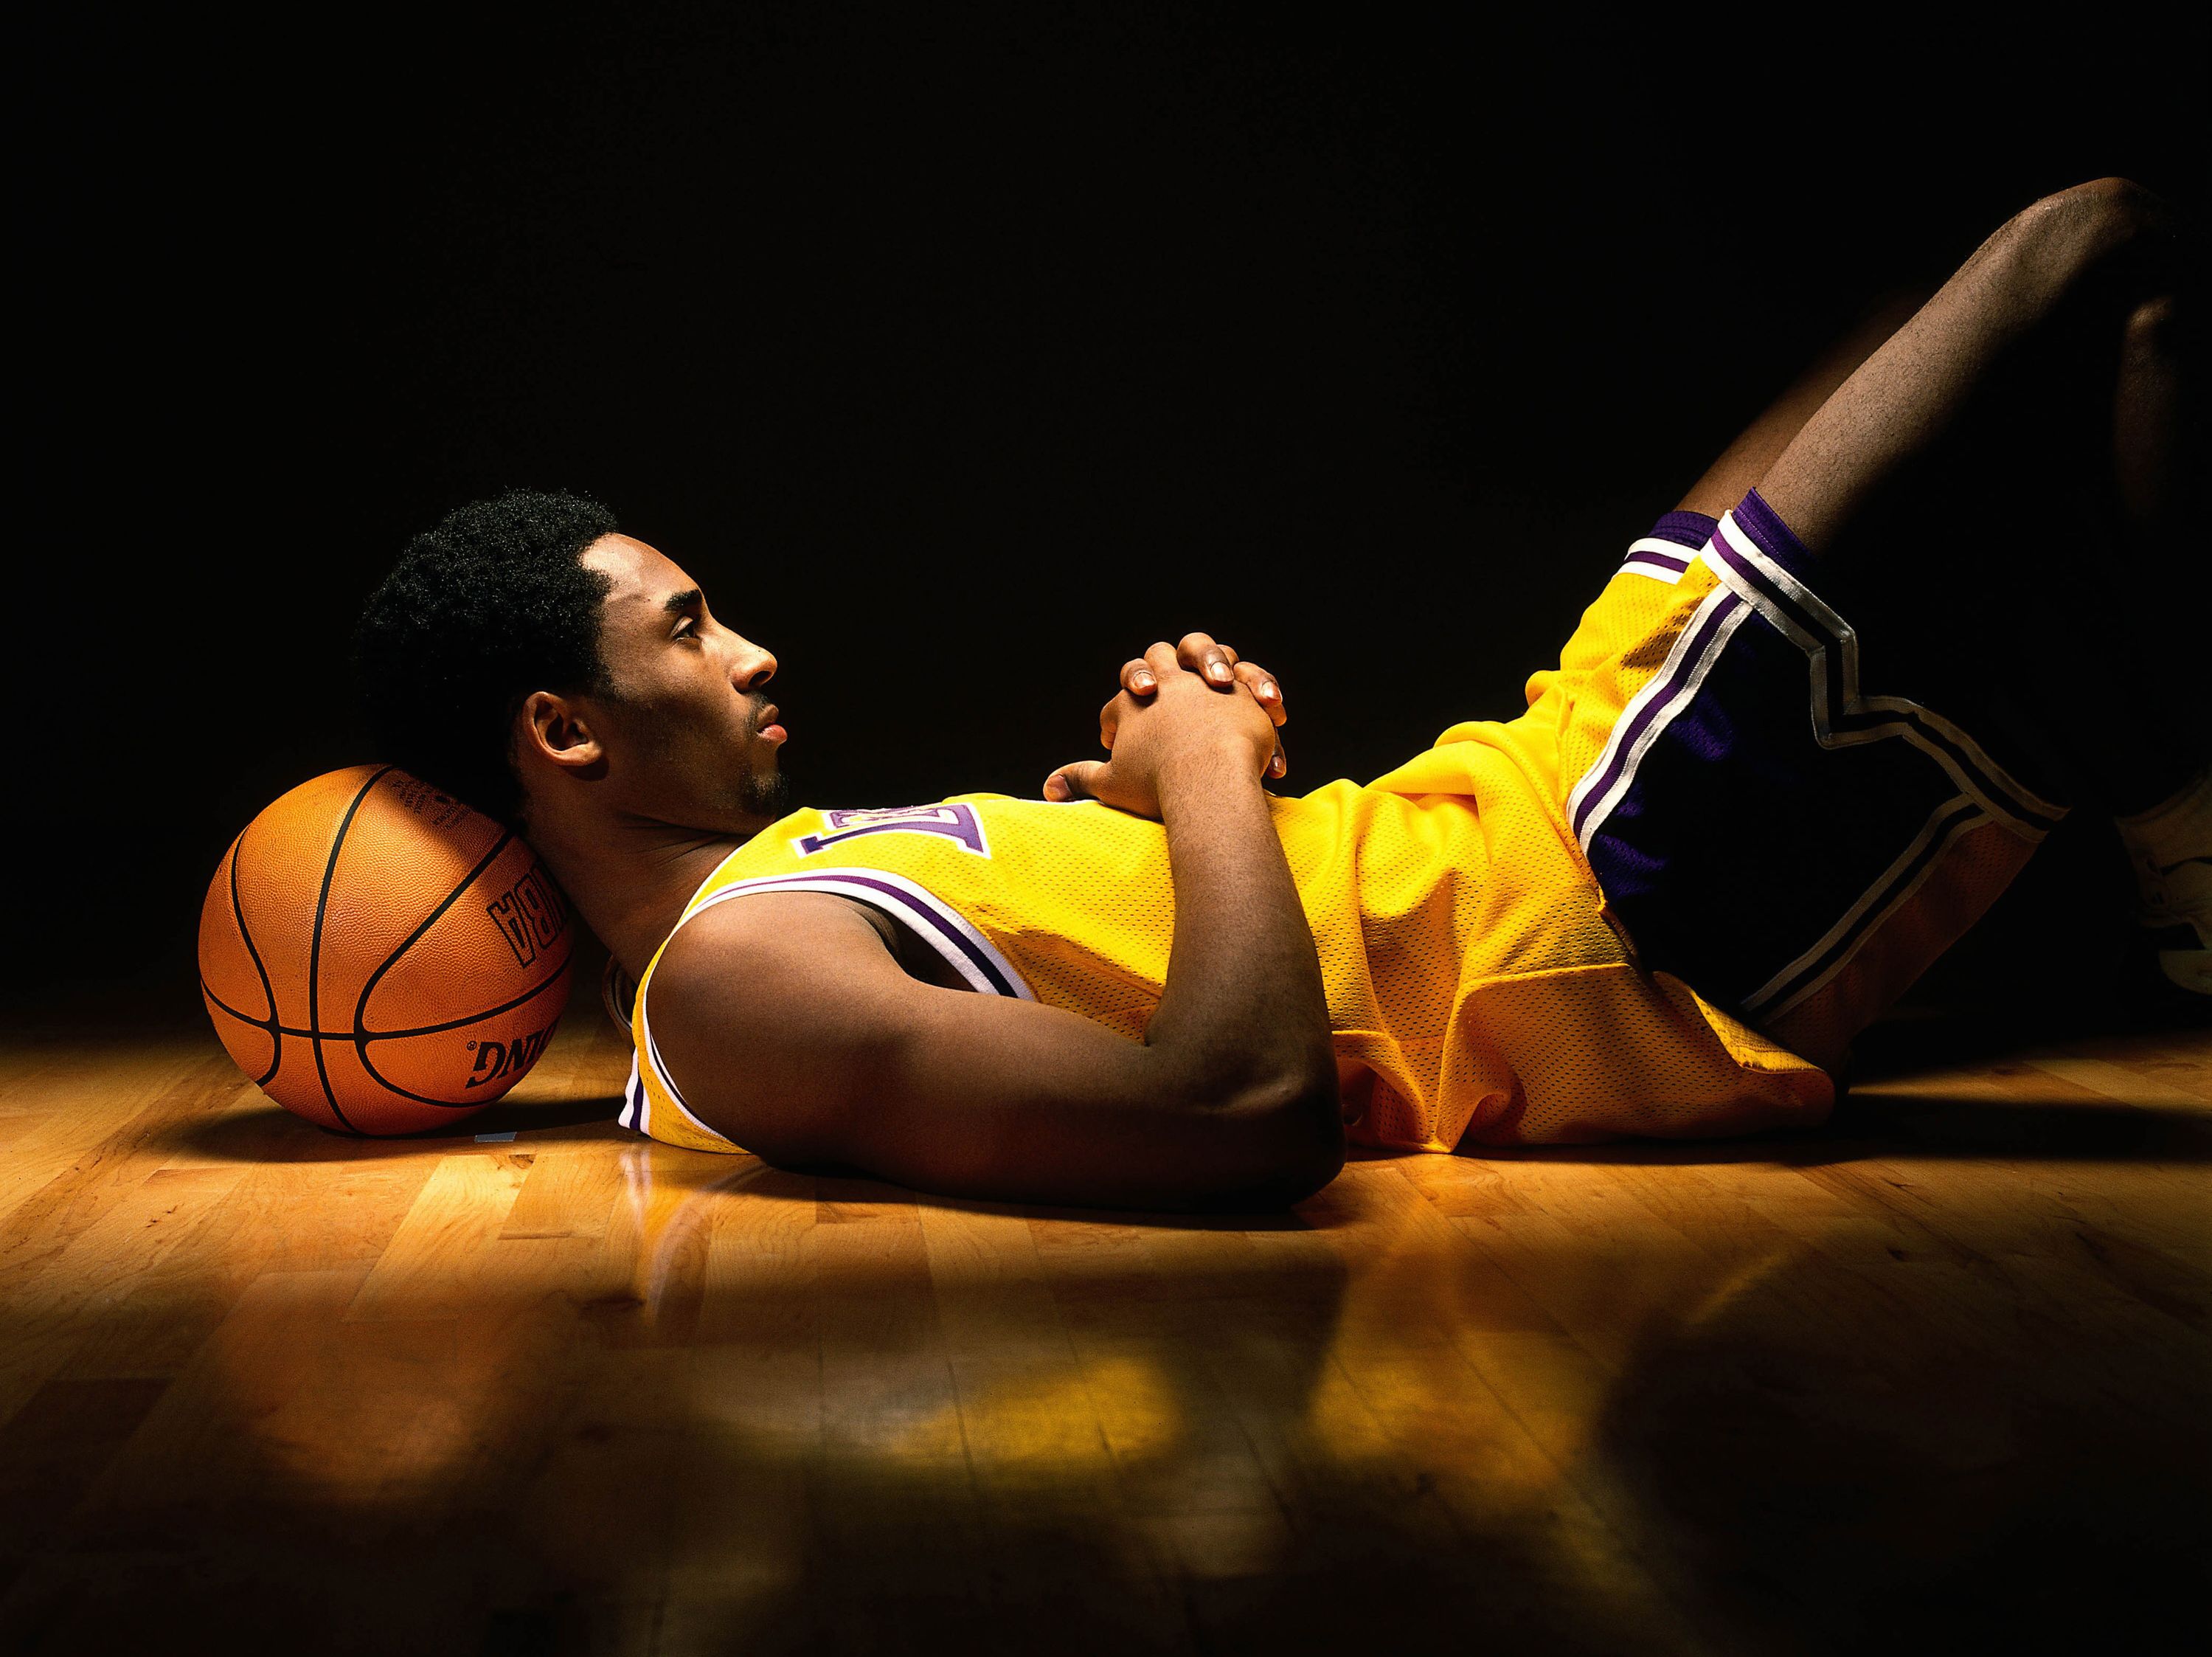 Two decades of Kobe - Photos: Kobe Bryant Career Retrospective - ESPN